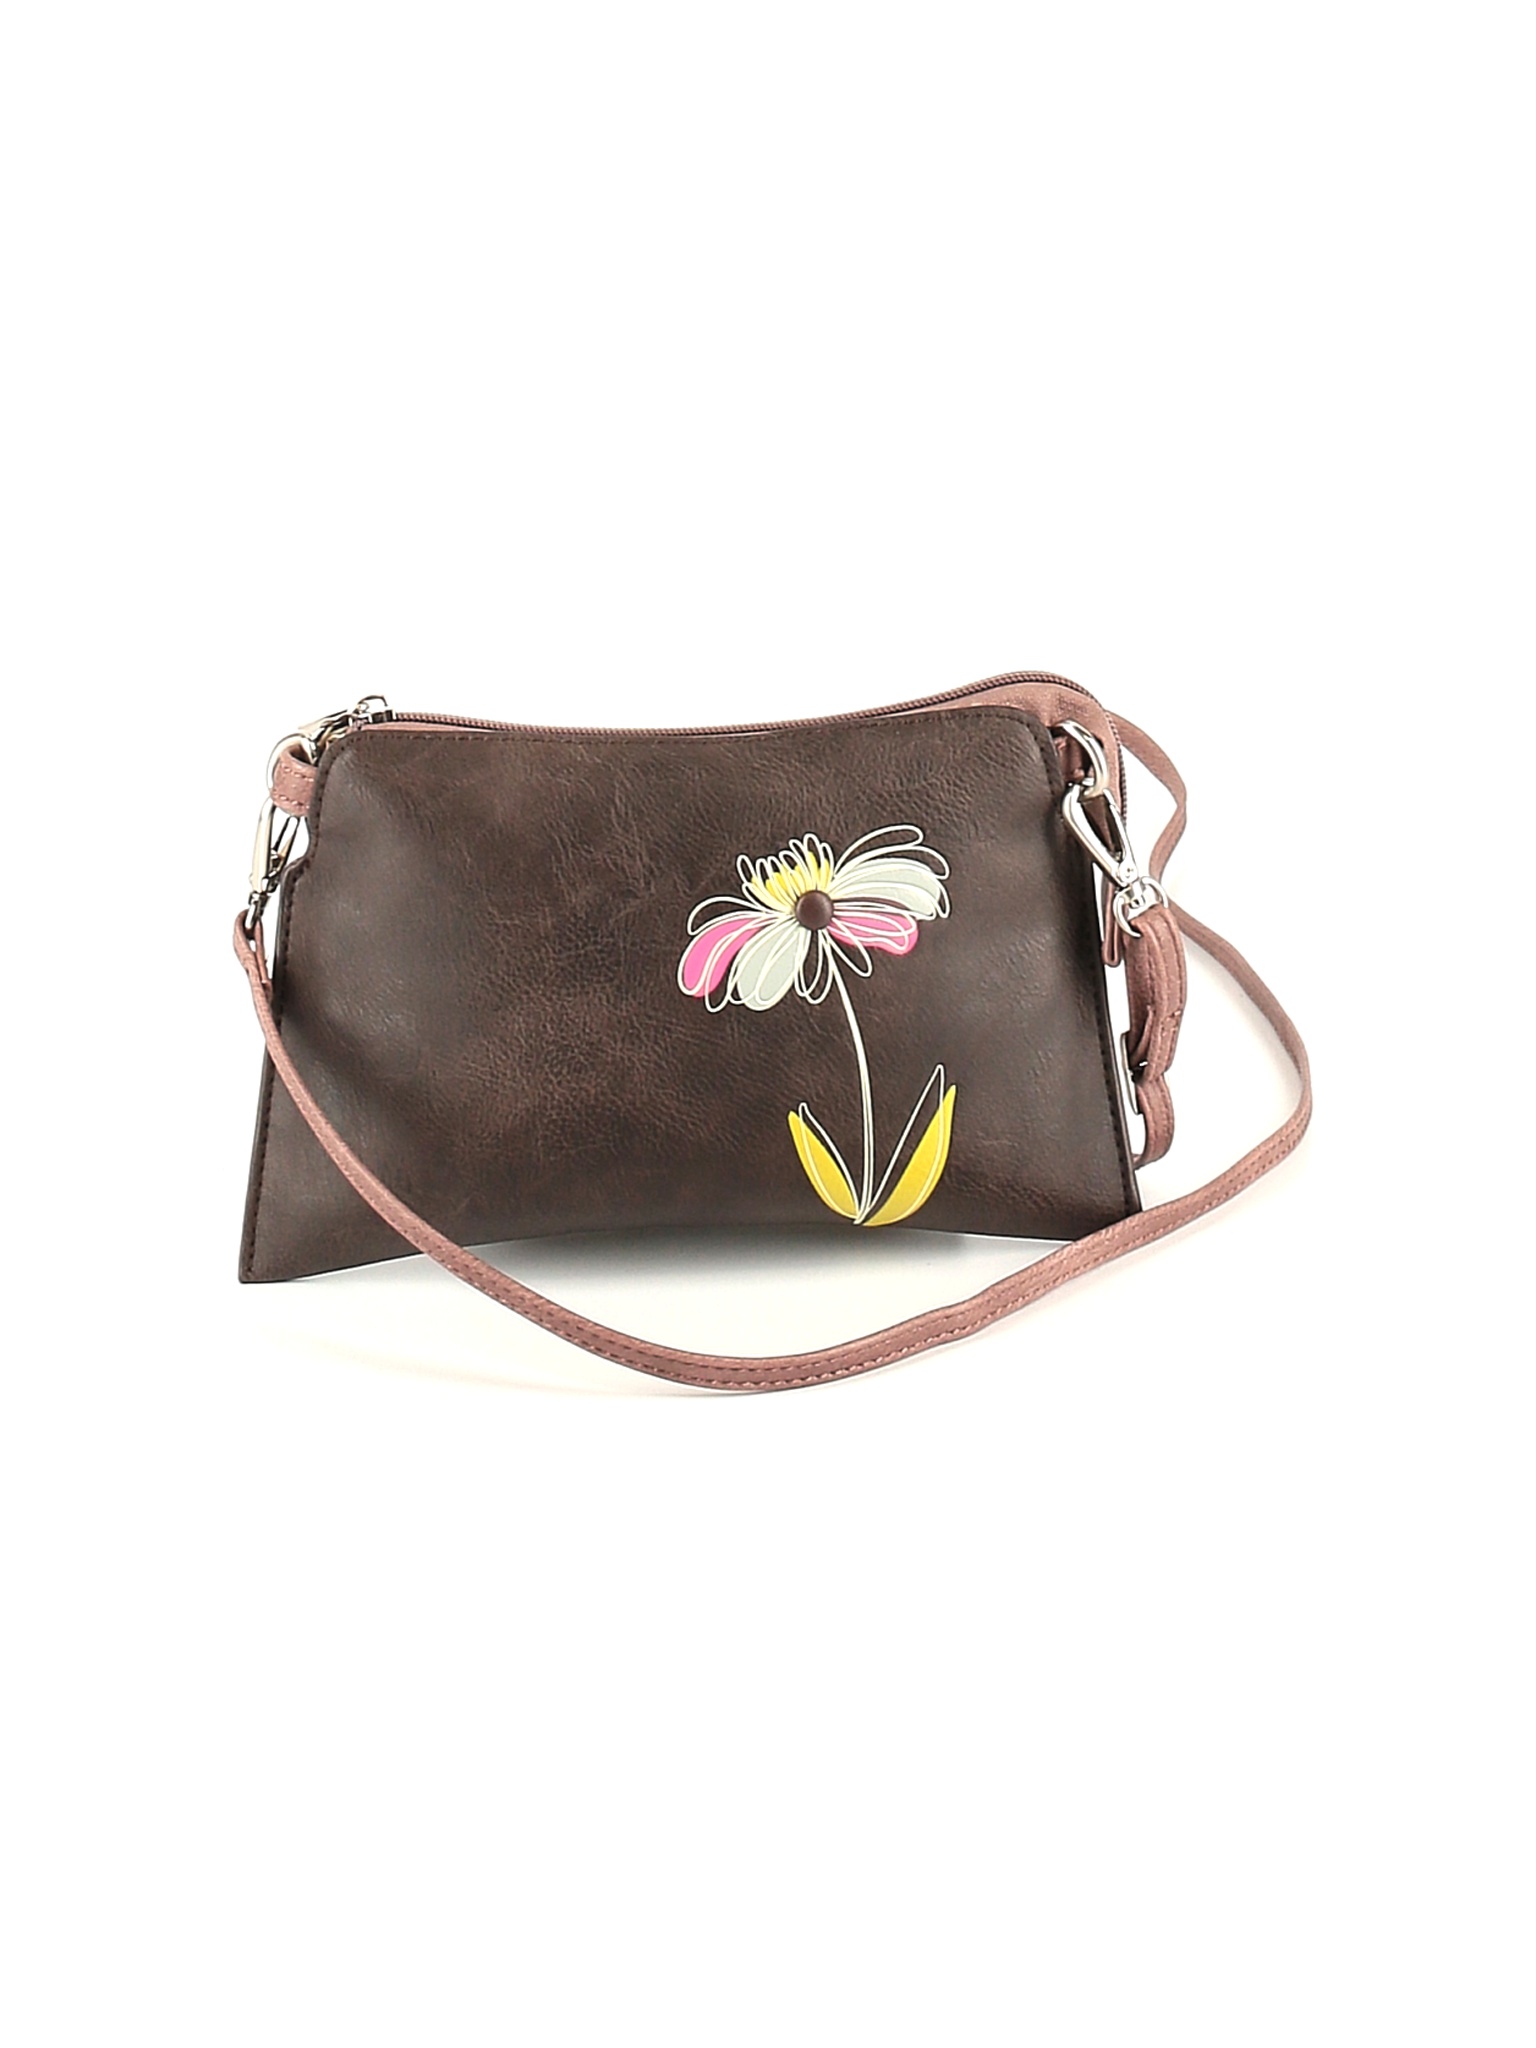 ESPE Women Brown Crossbody Bag One Size | eBay